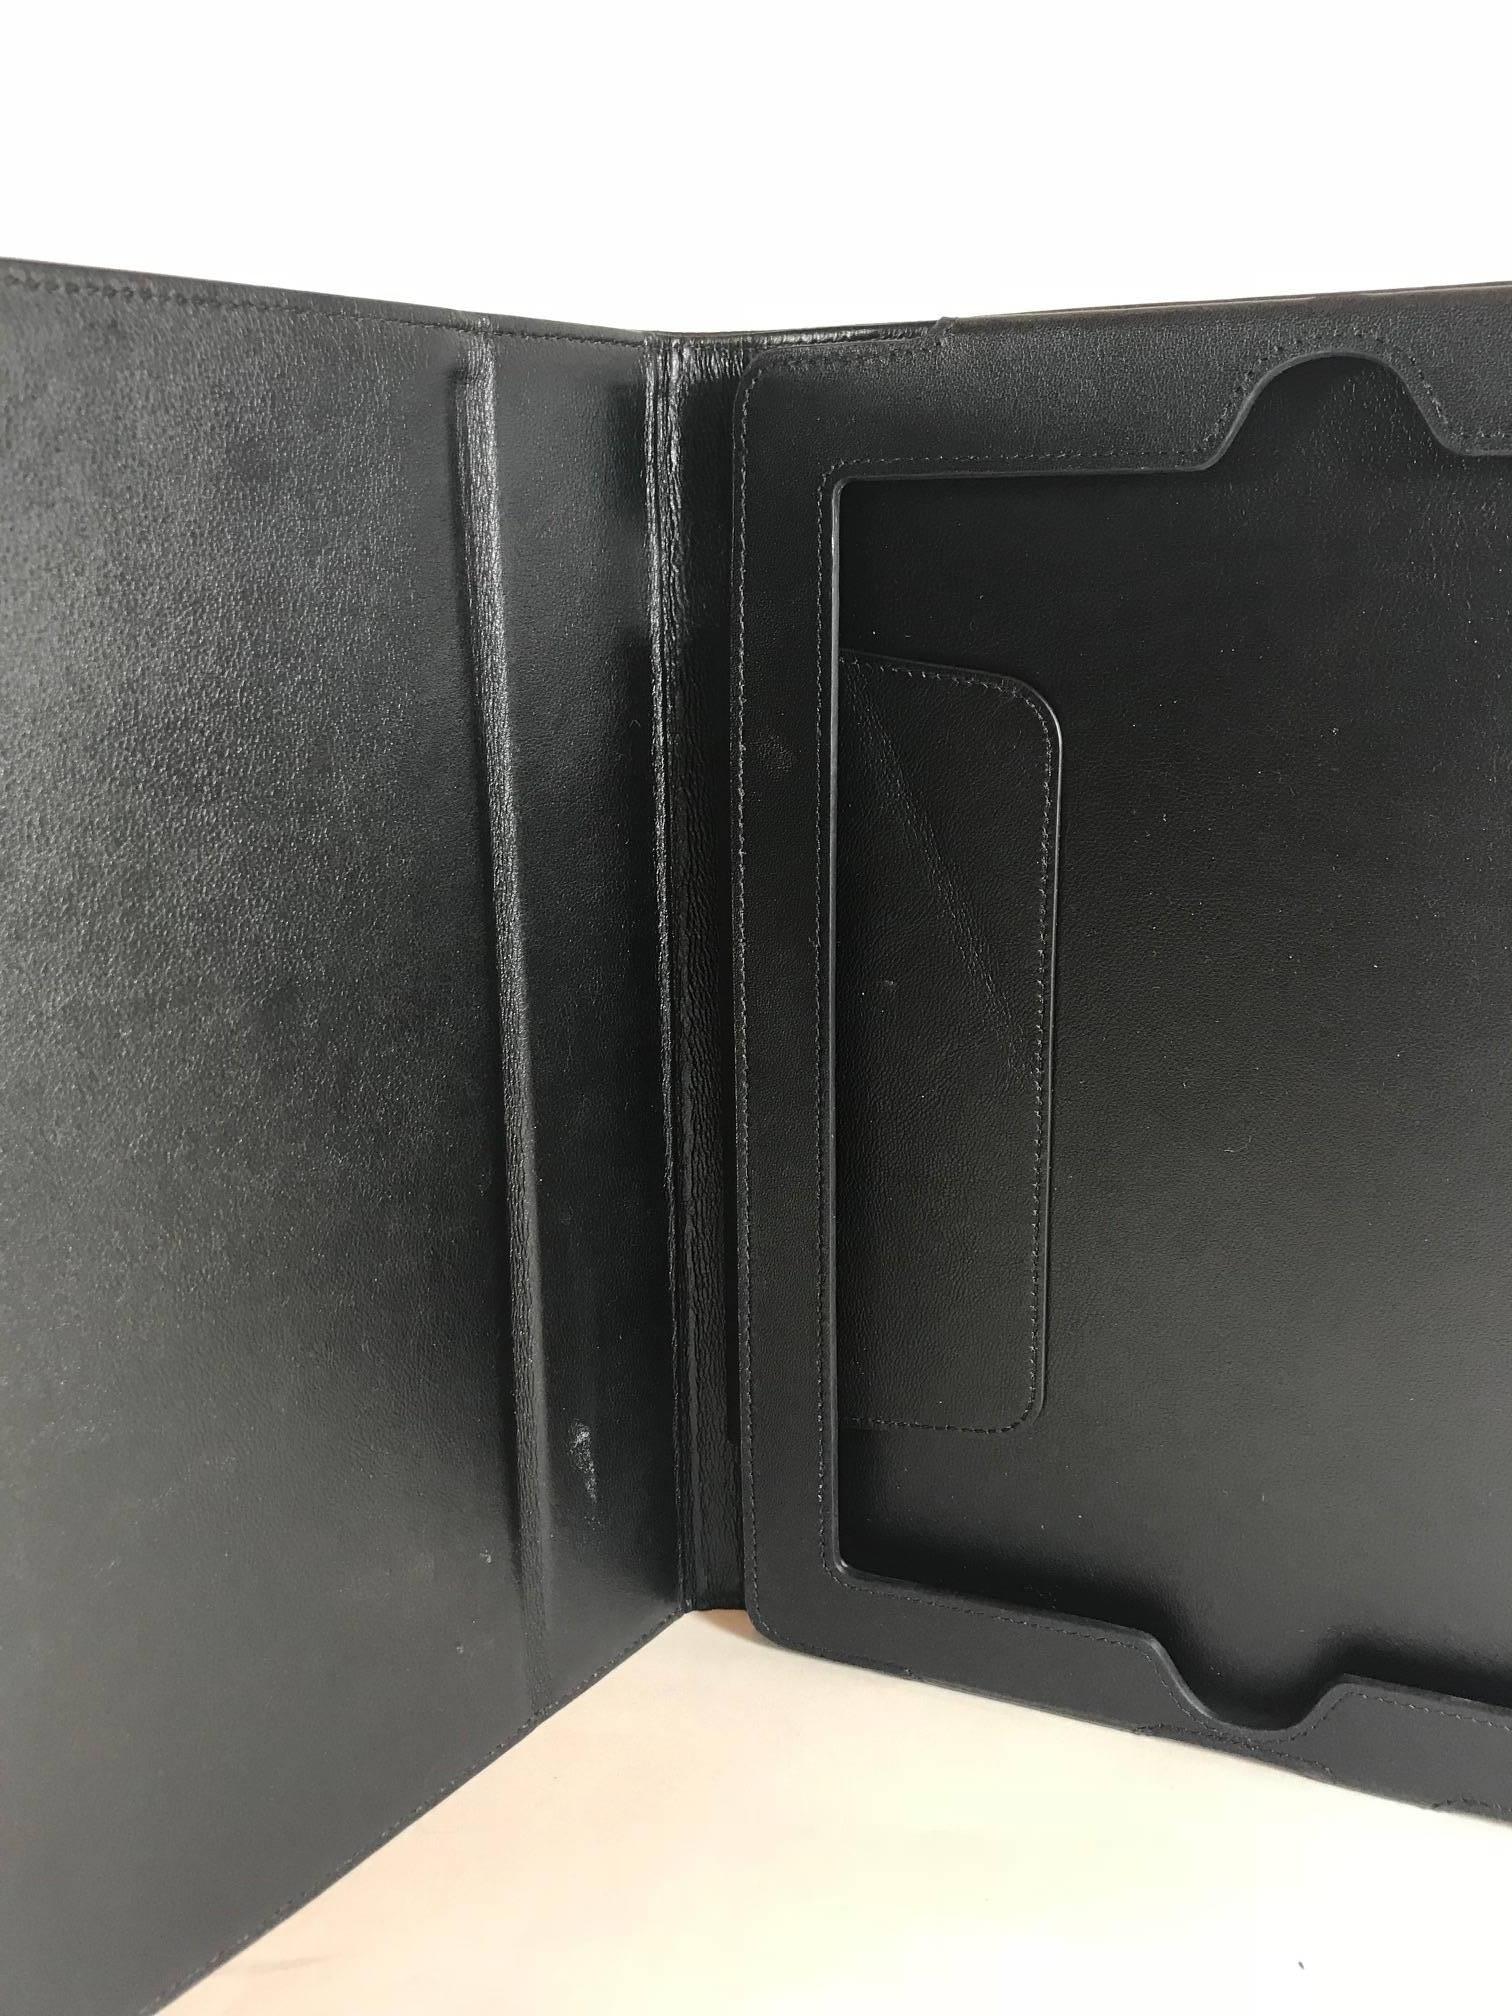 Chanel Black Ipad Case Holder 4